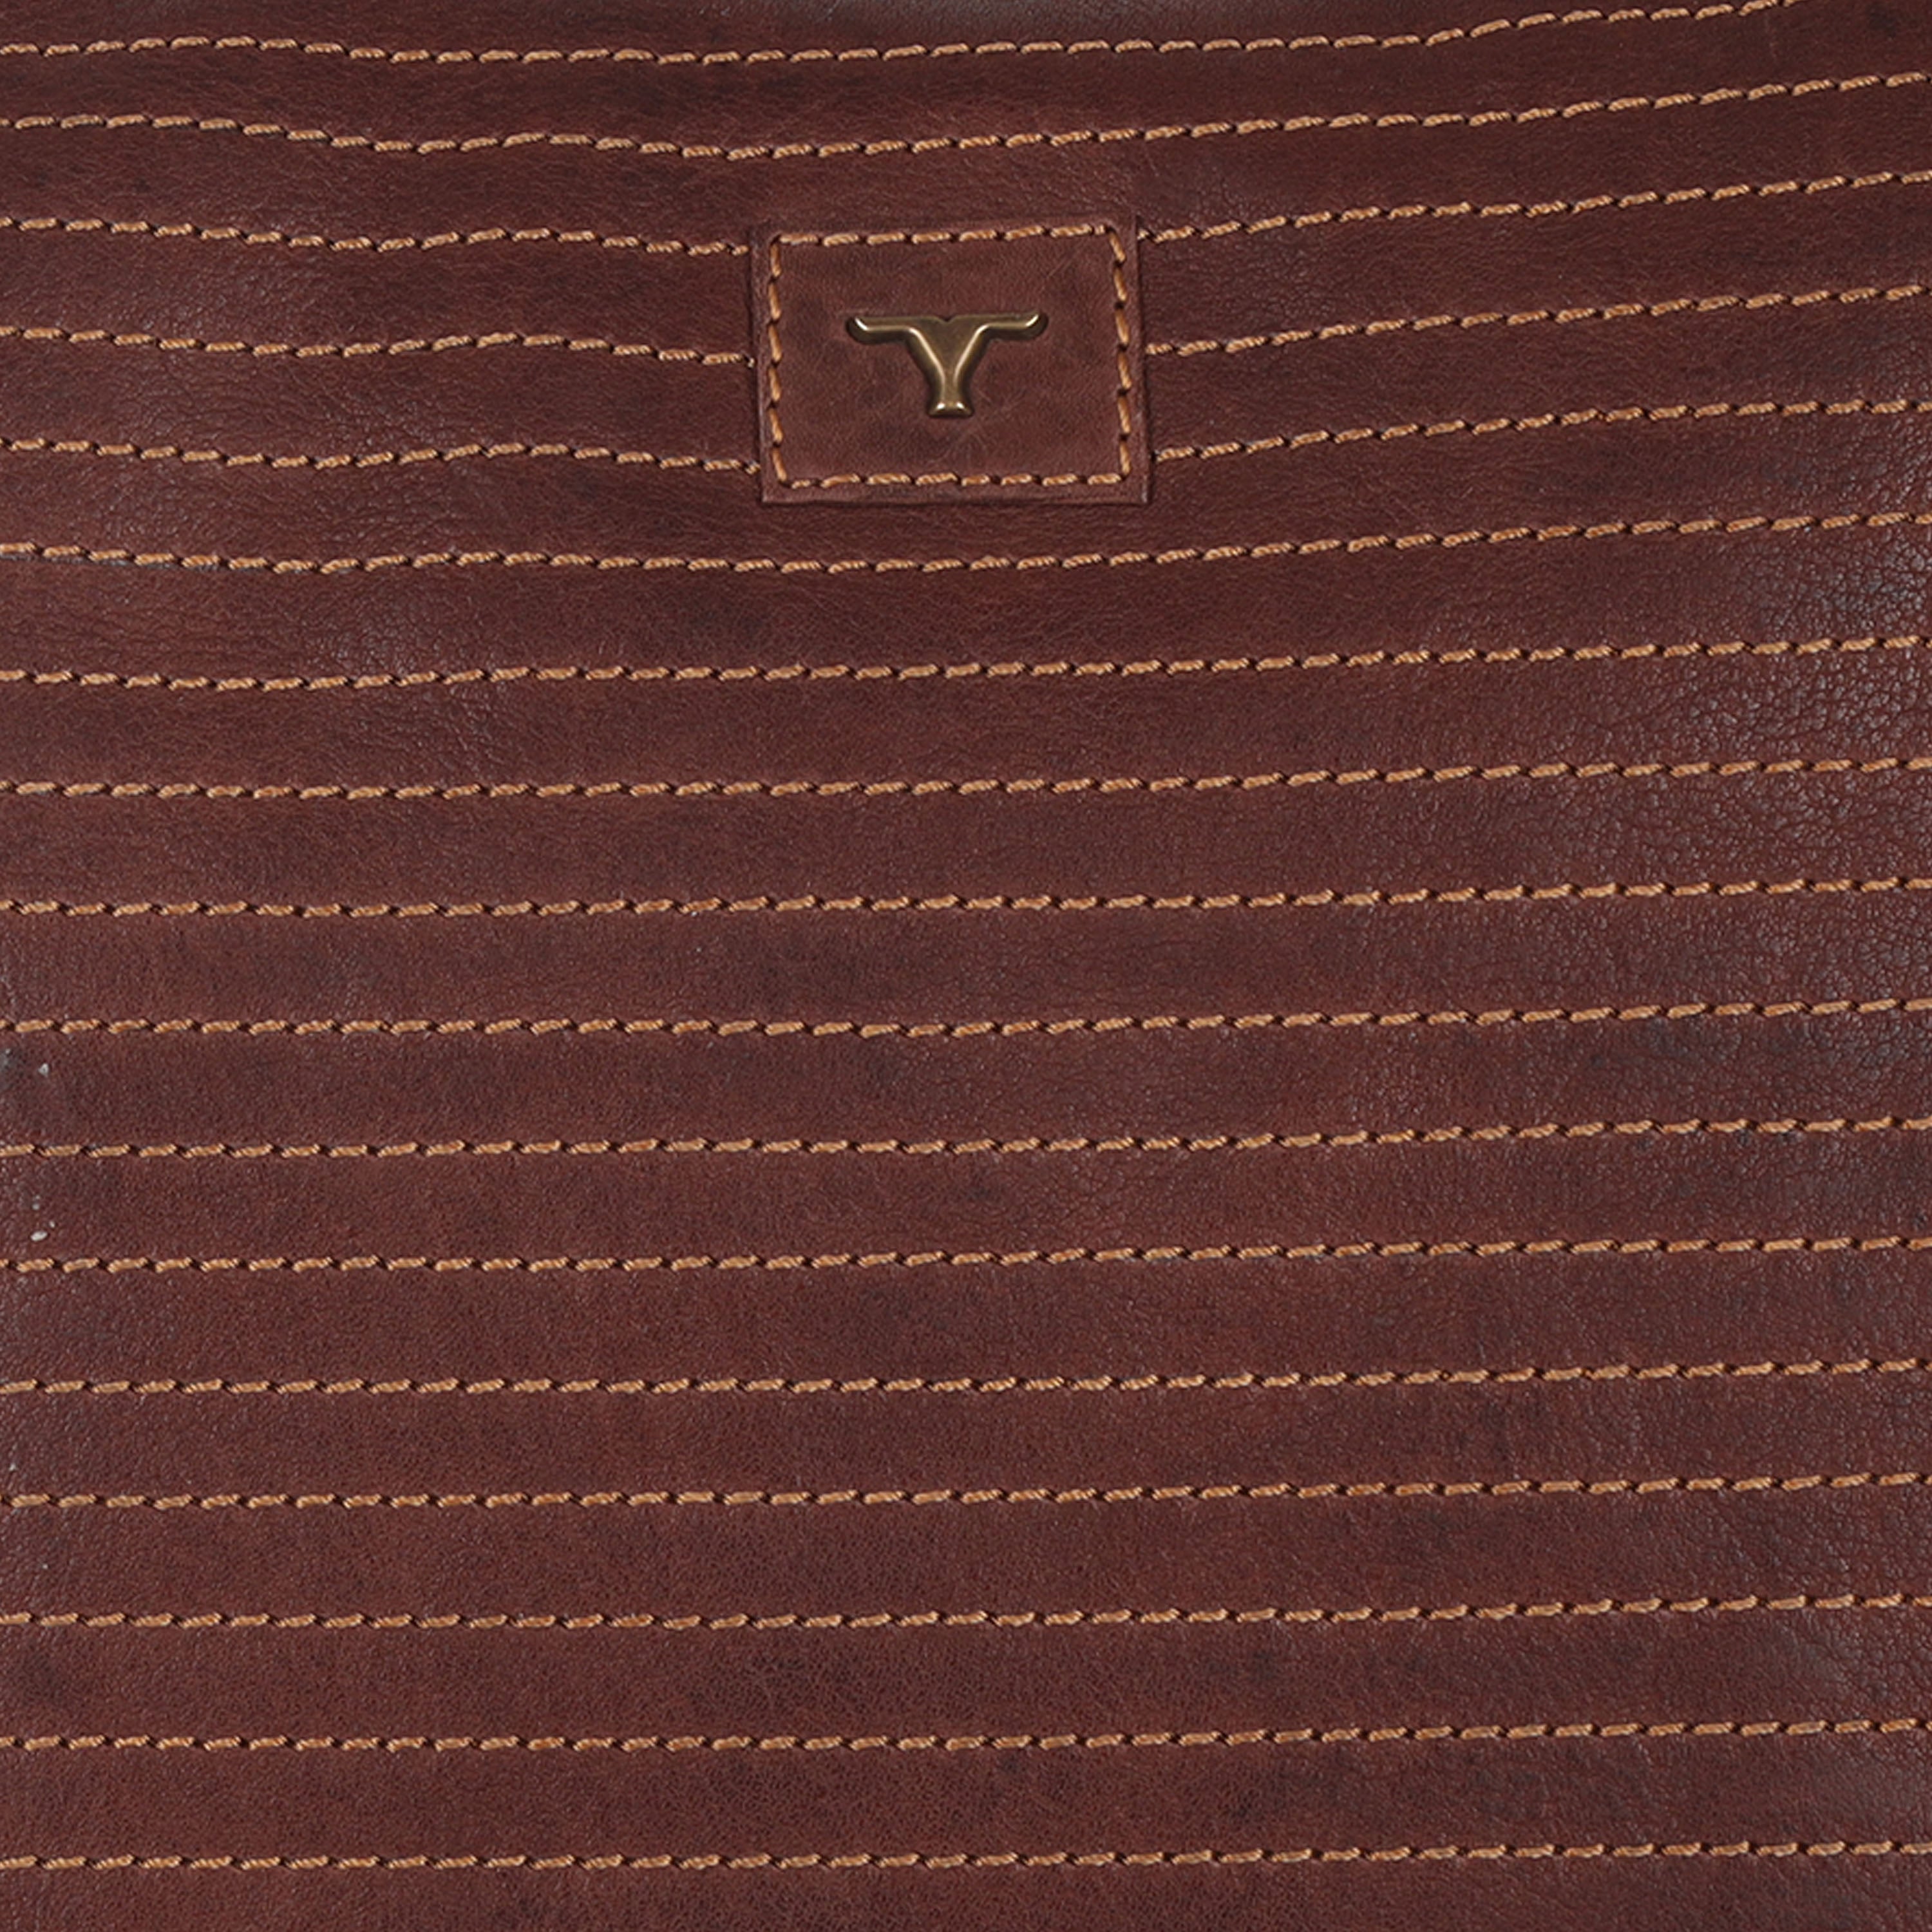 Bulchee Leather Ladies Brown Hand Bag - HBL2101.2